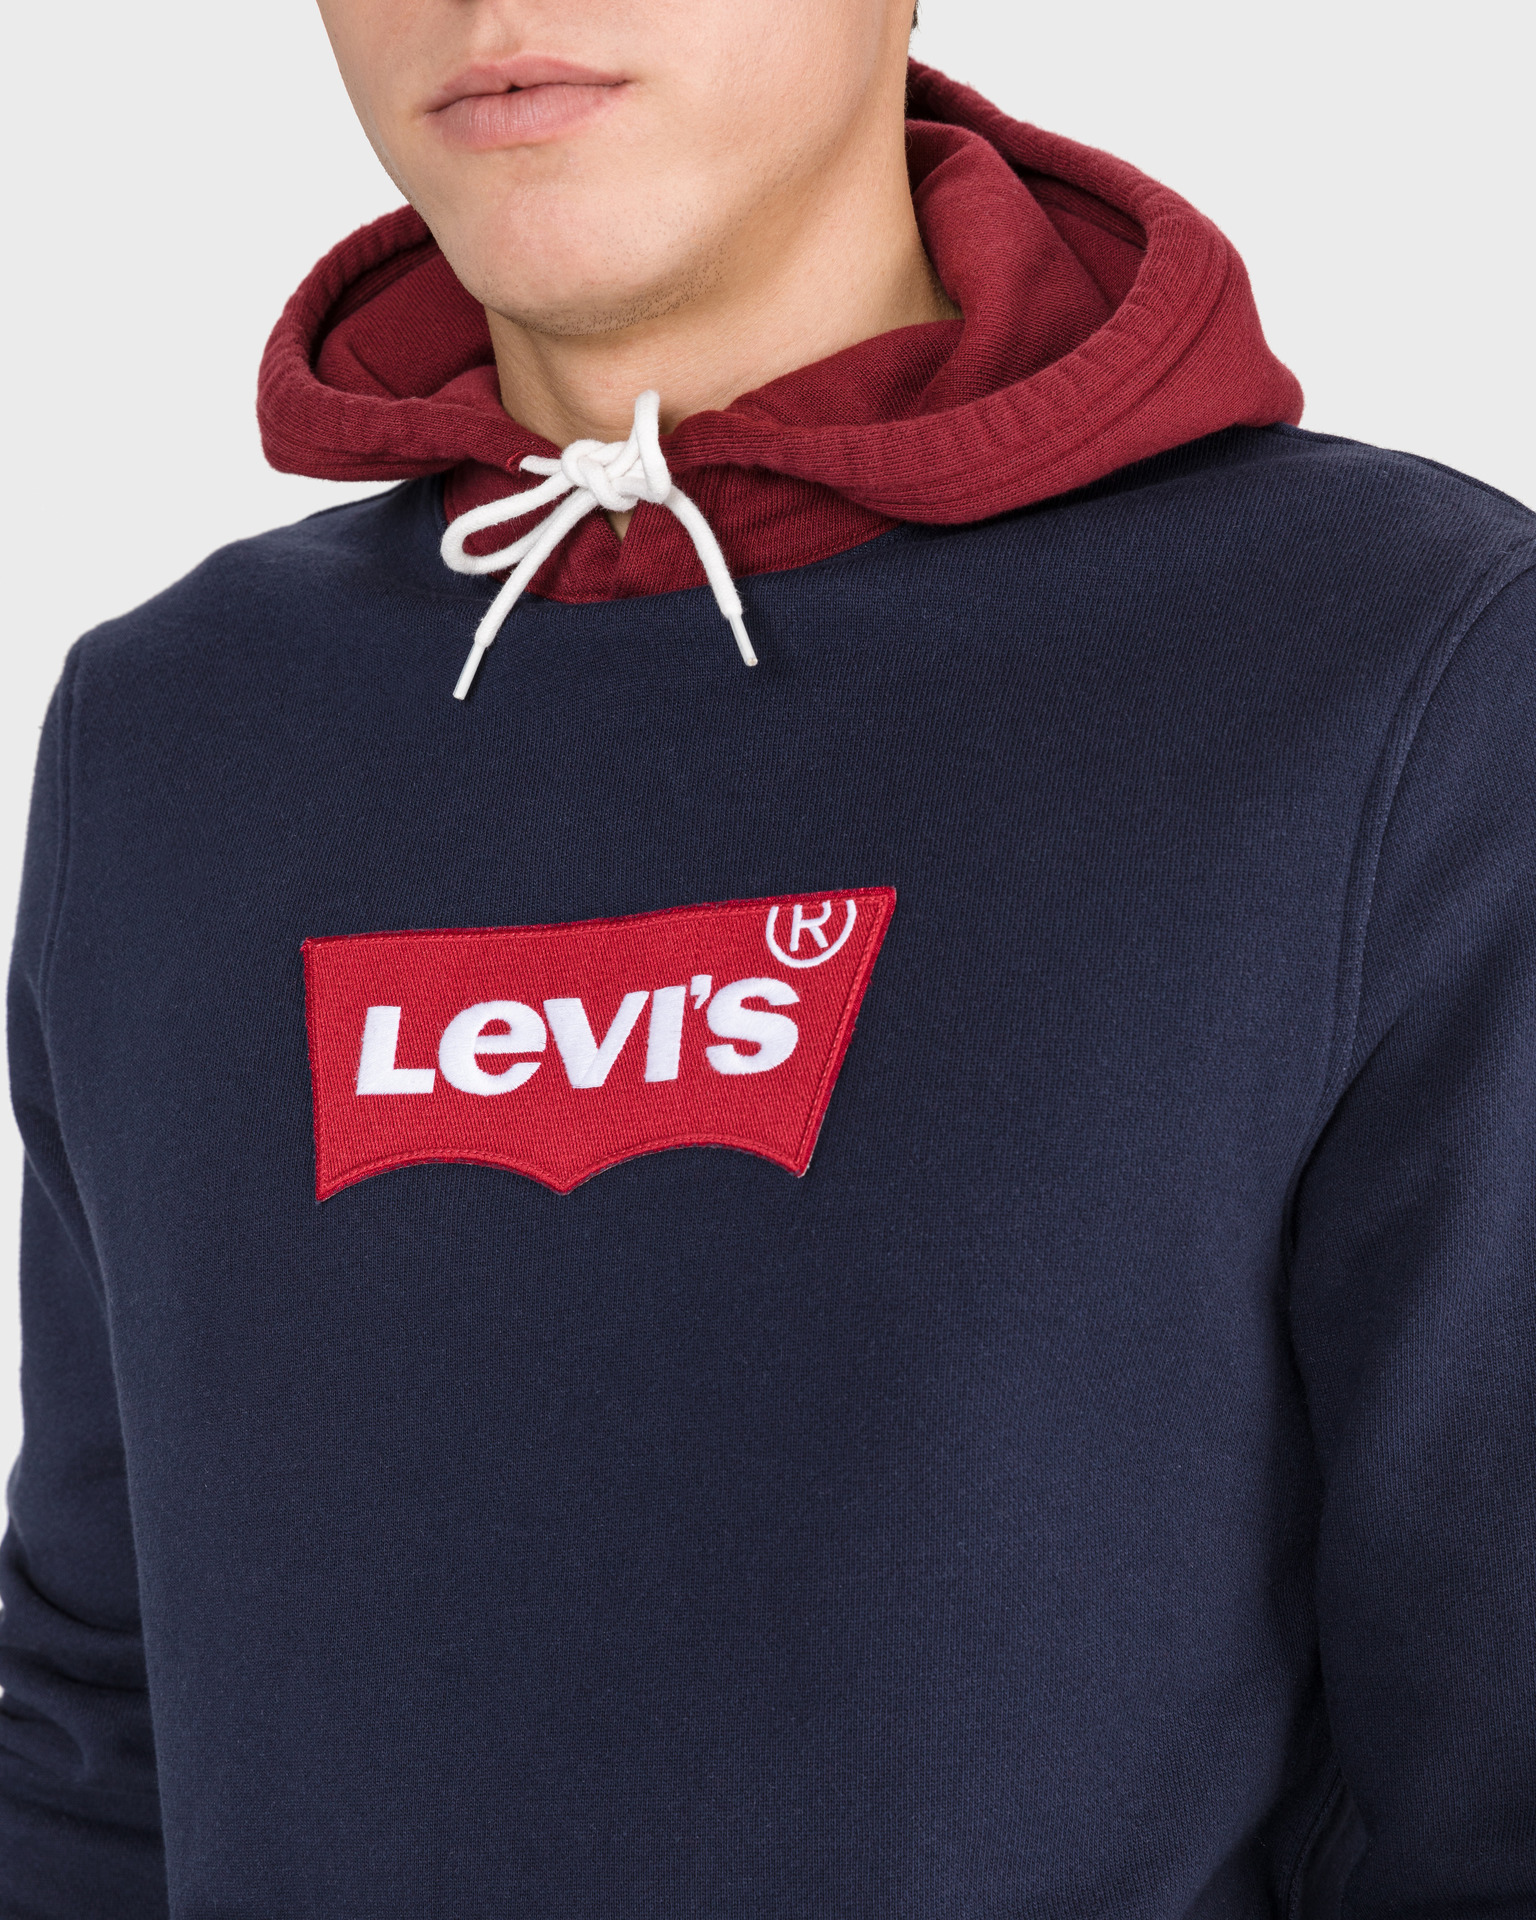 levi's modern hm hoodie